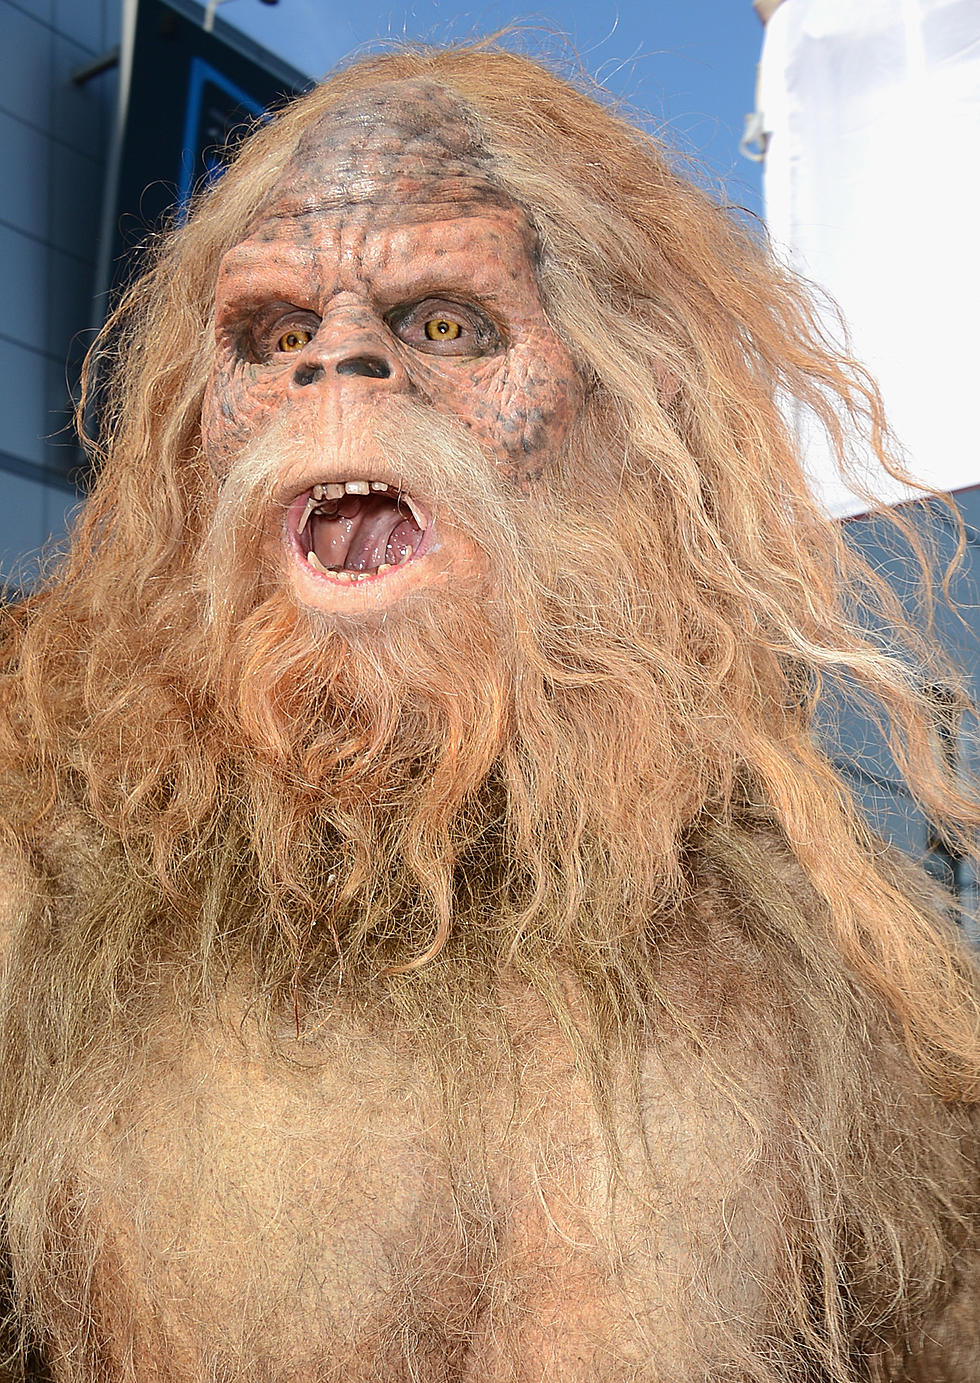 Free Beer & Hot Wings: Bigfoot Hunter Takes His Bigfoot Corpse on Tour [Video]